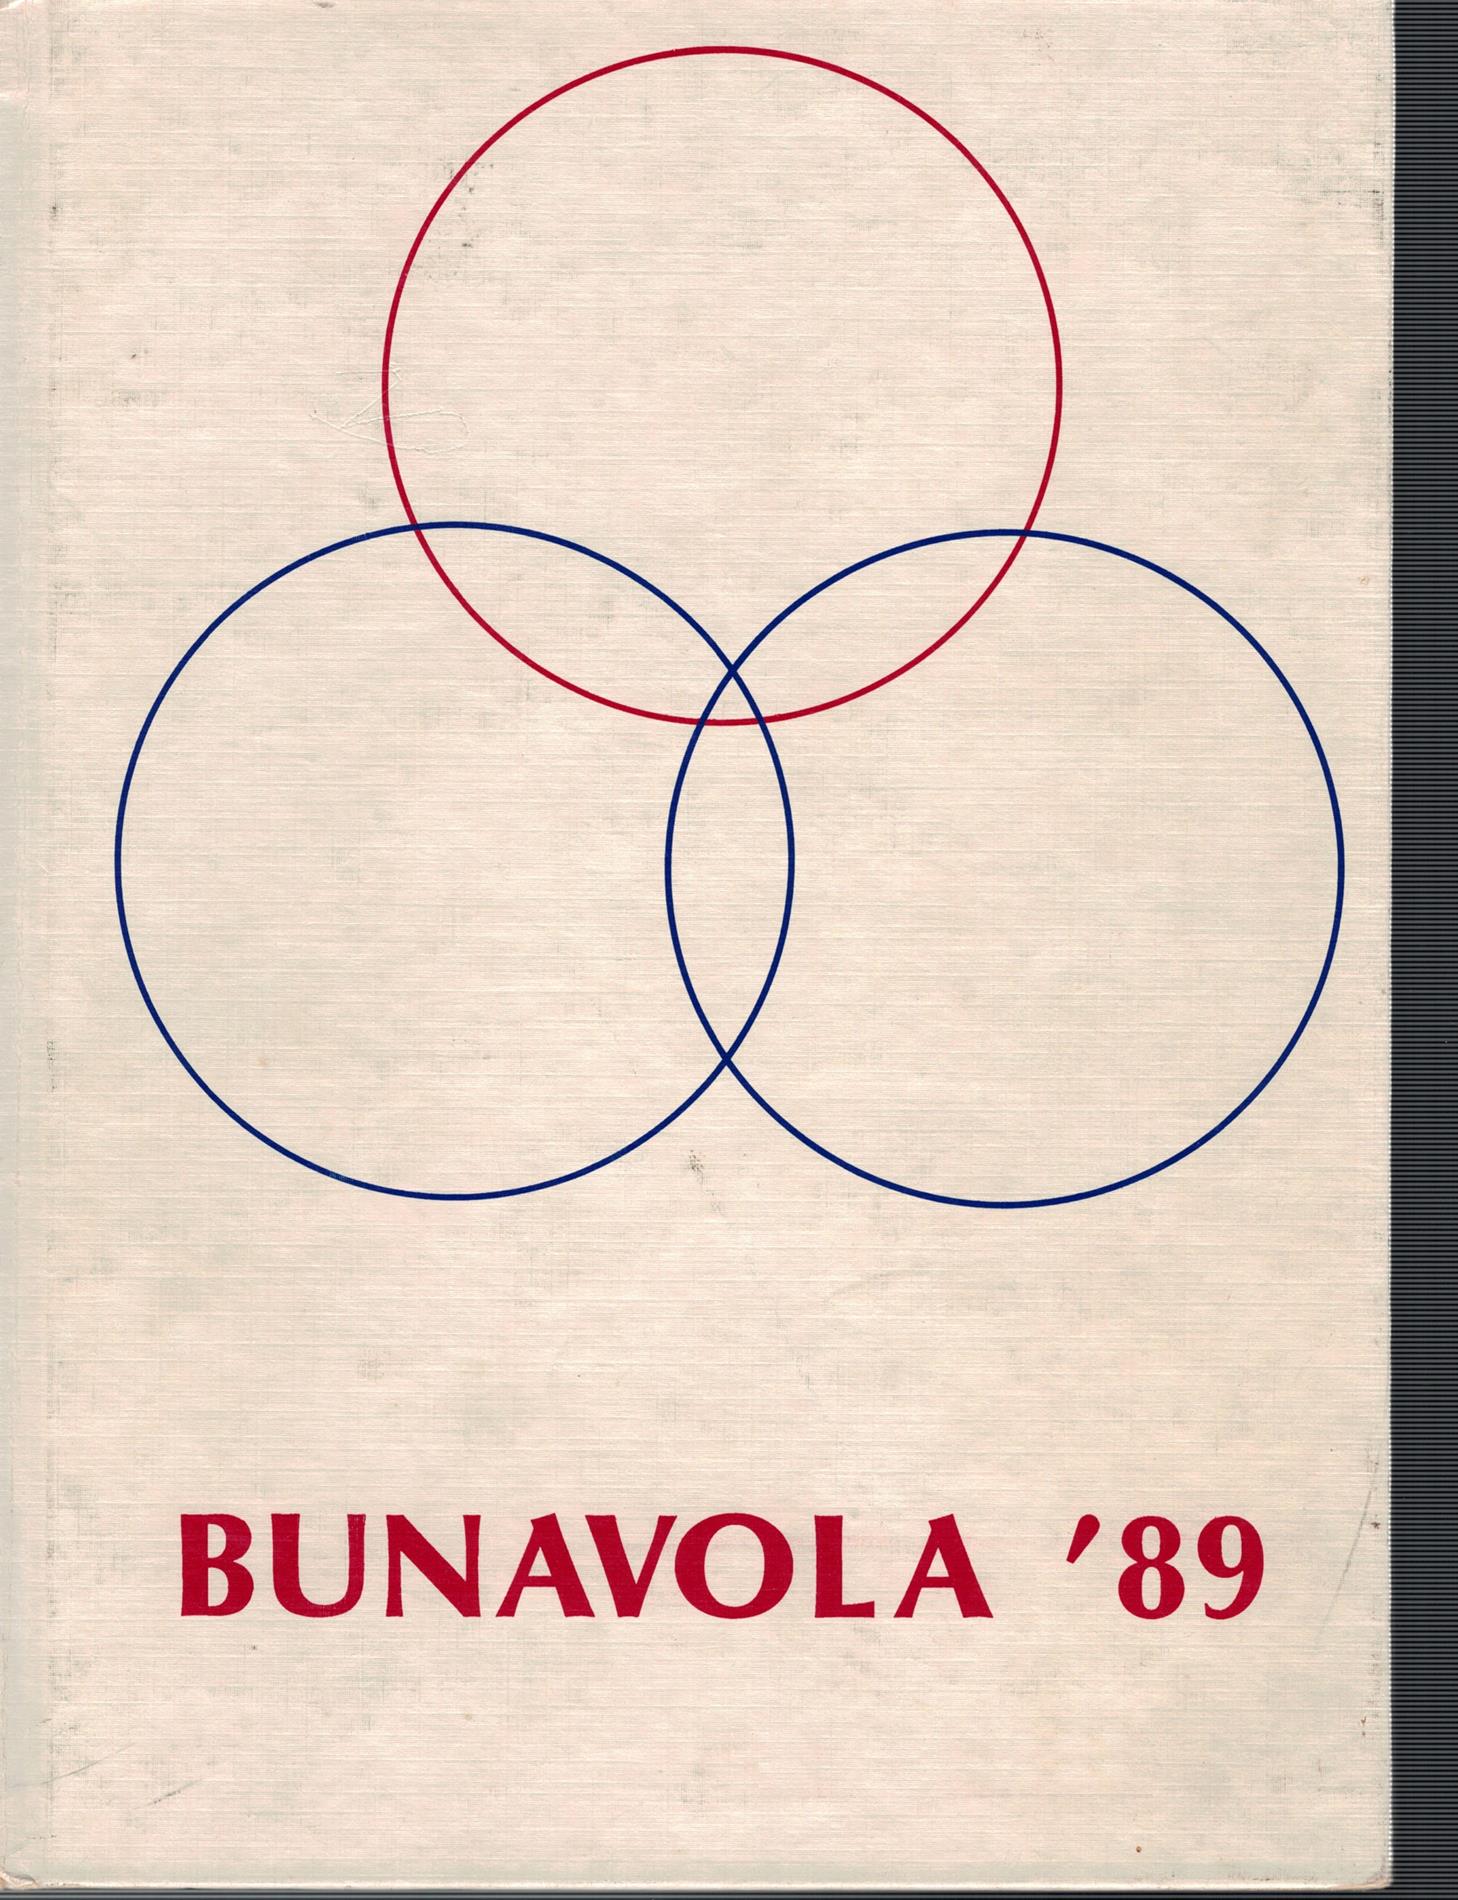 1989 Bunavola